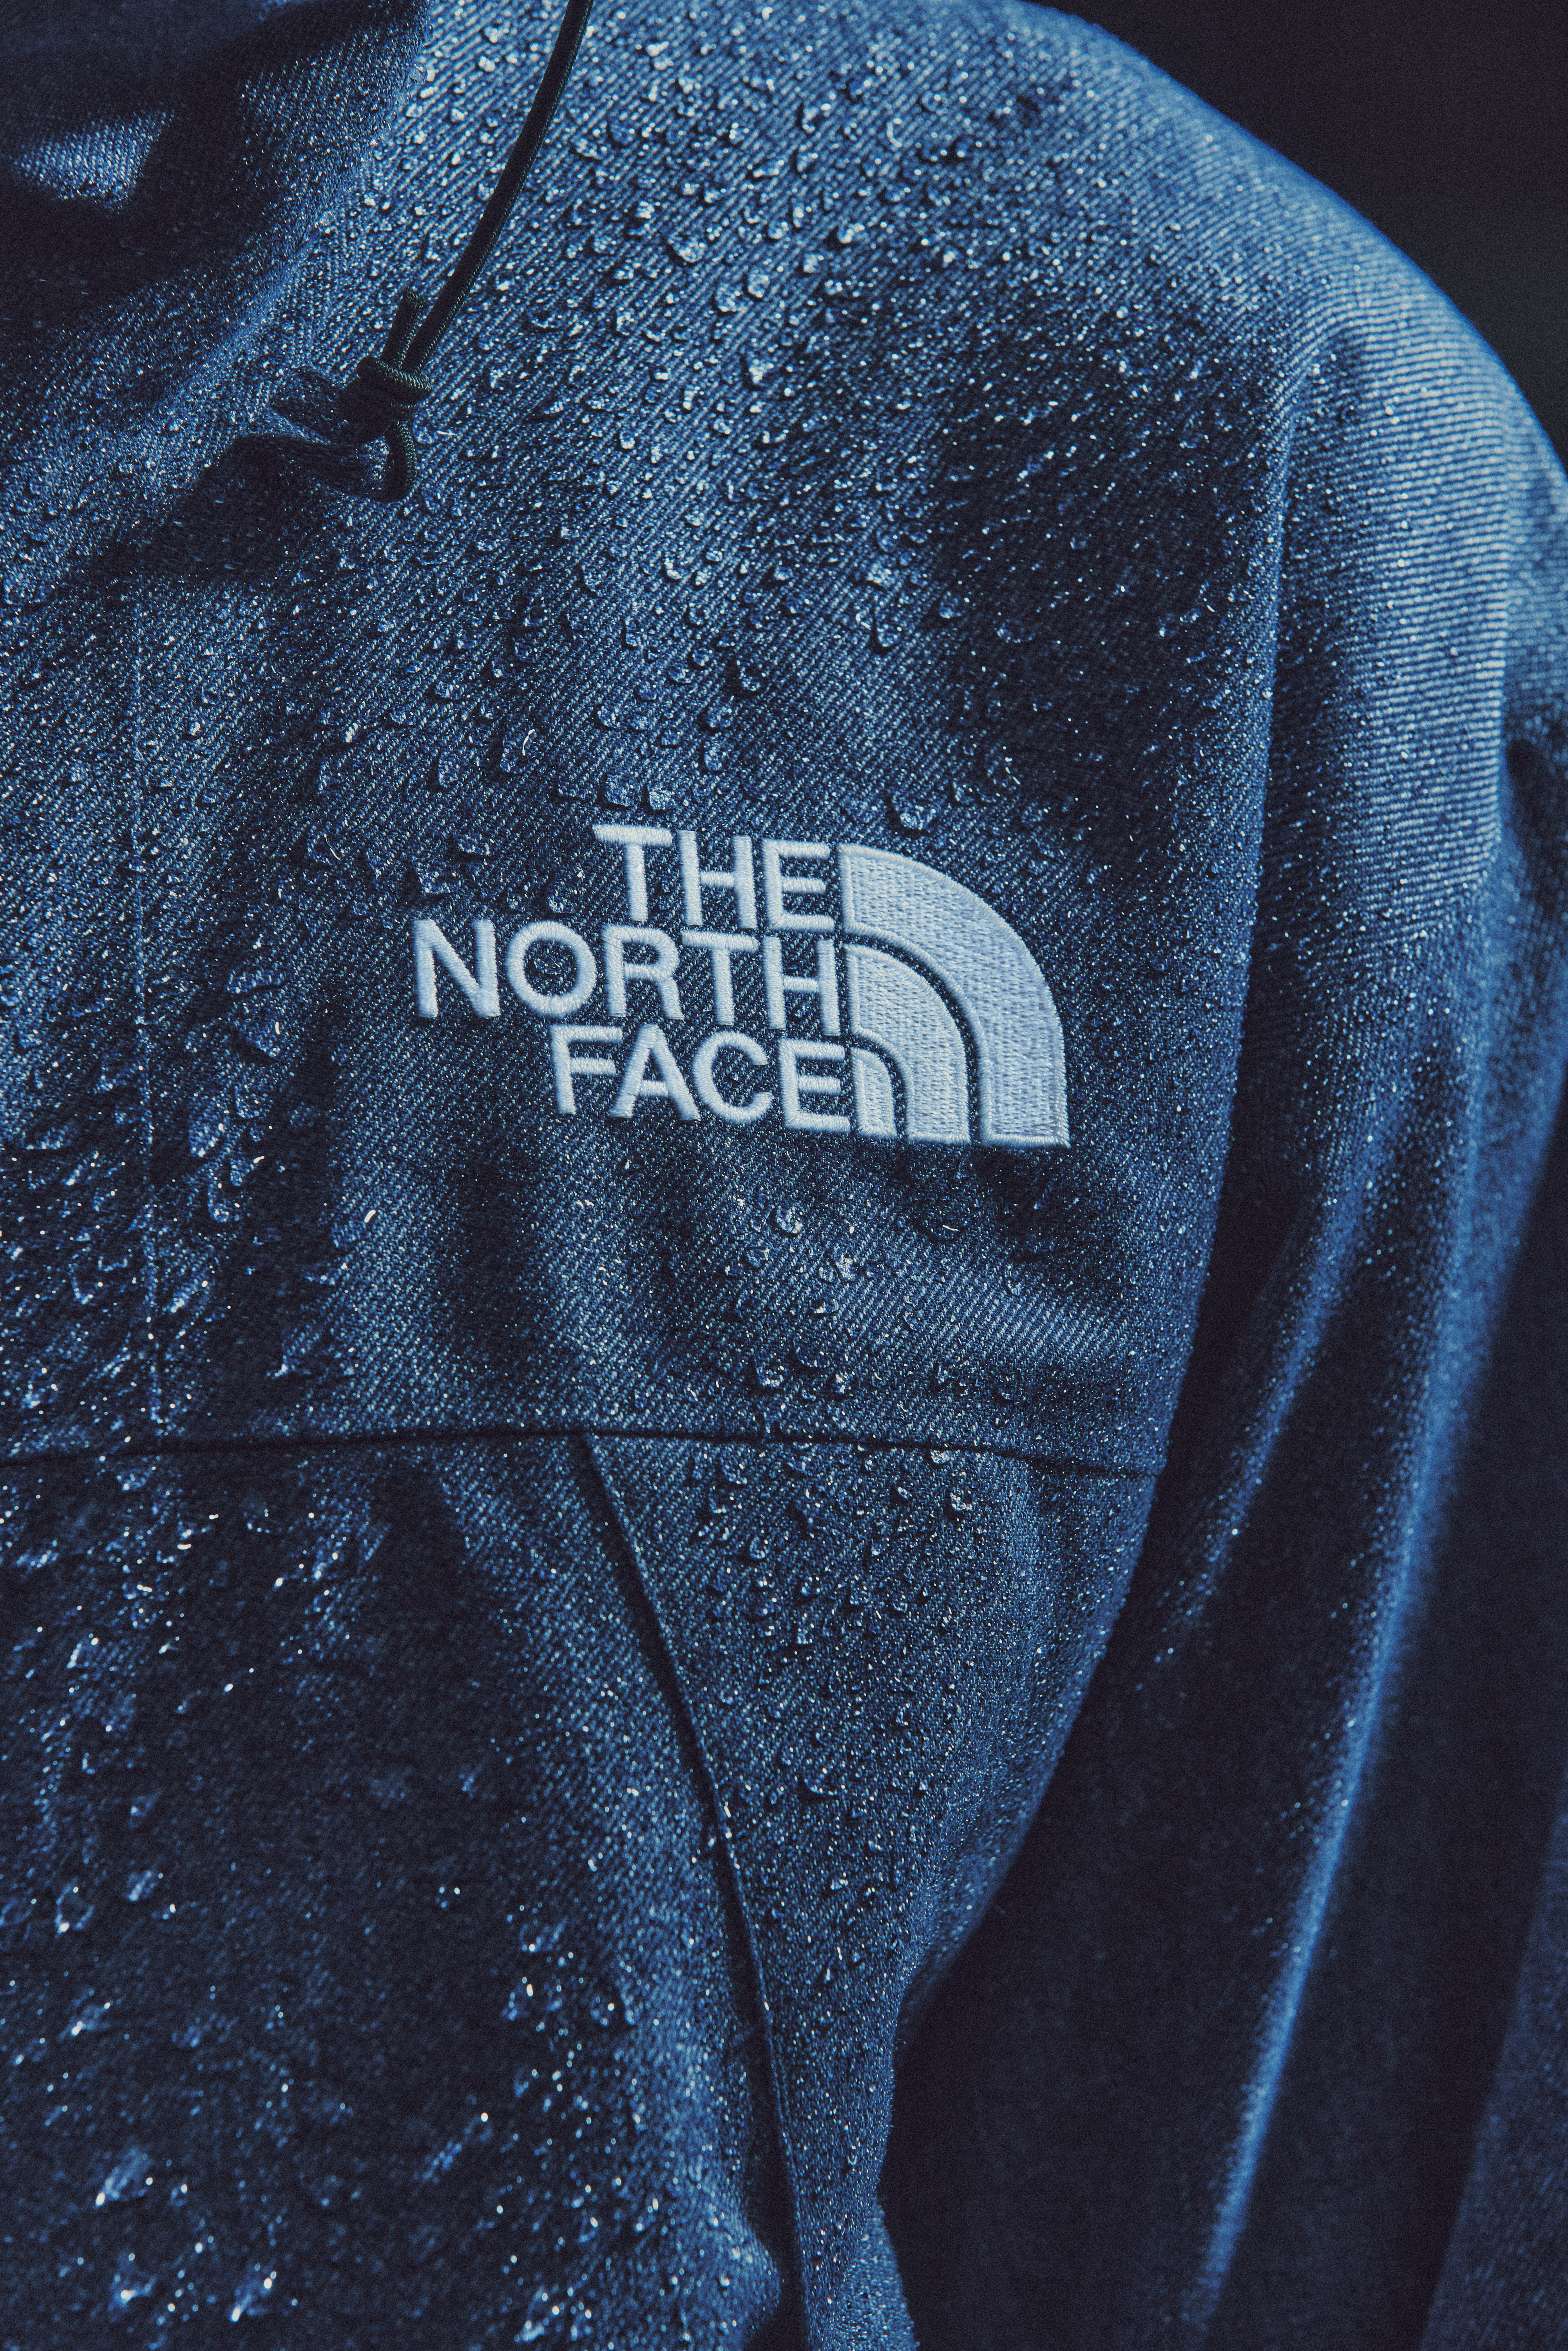 The North Face Defies Logic With Denim GORE-TEX Capsule